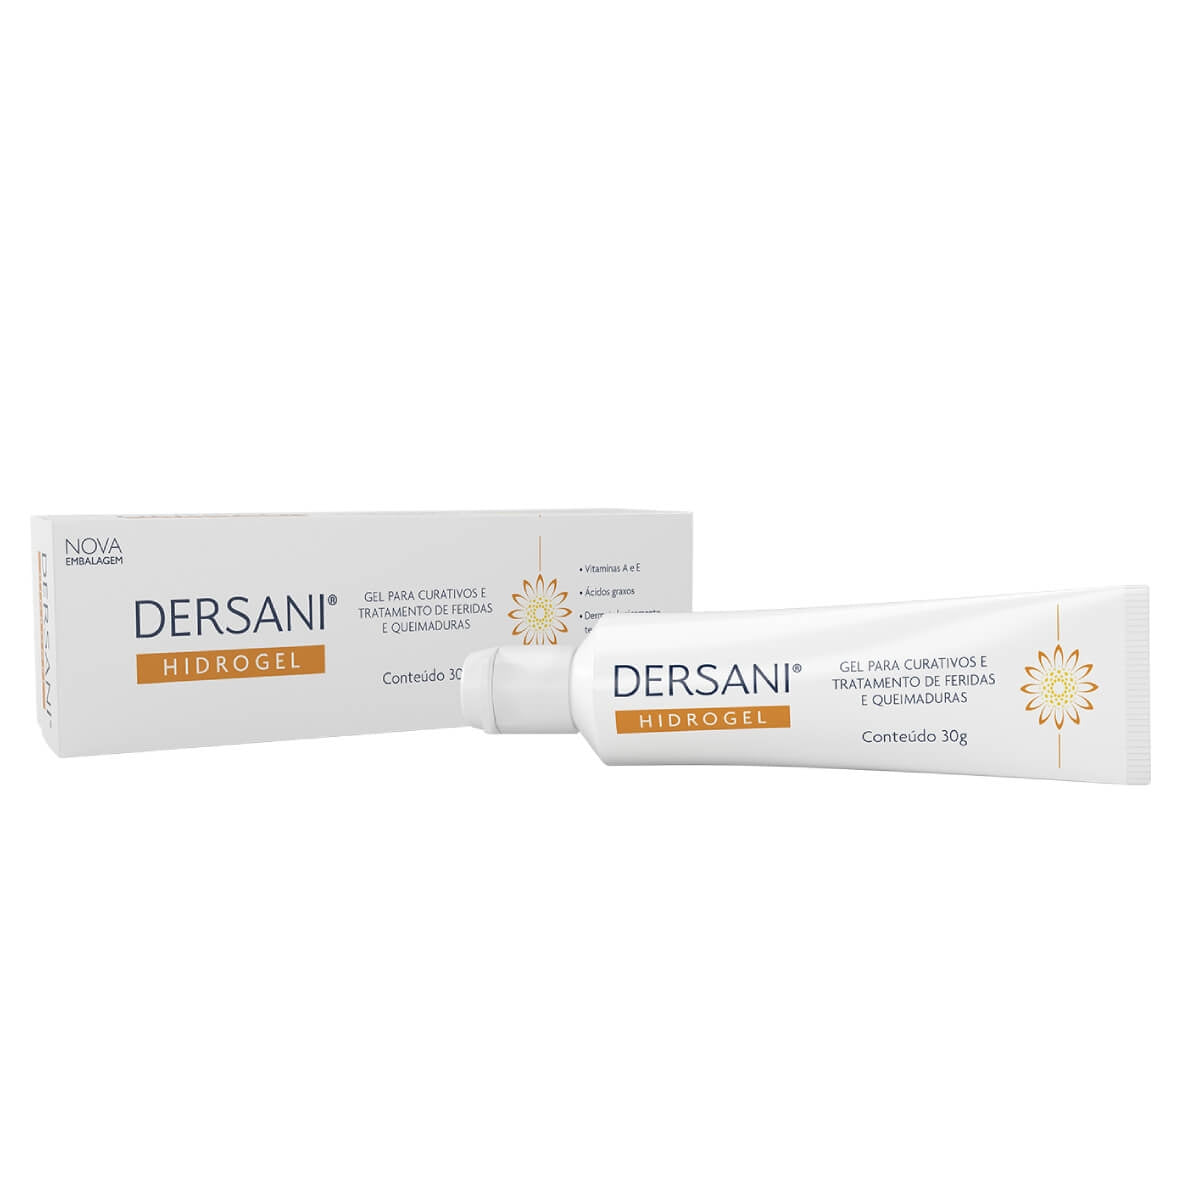 Dersani Hydrogel Healing and Bactericidal - 30g